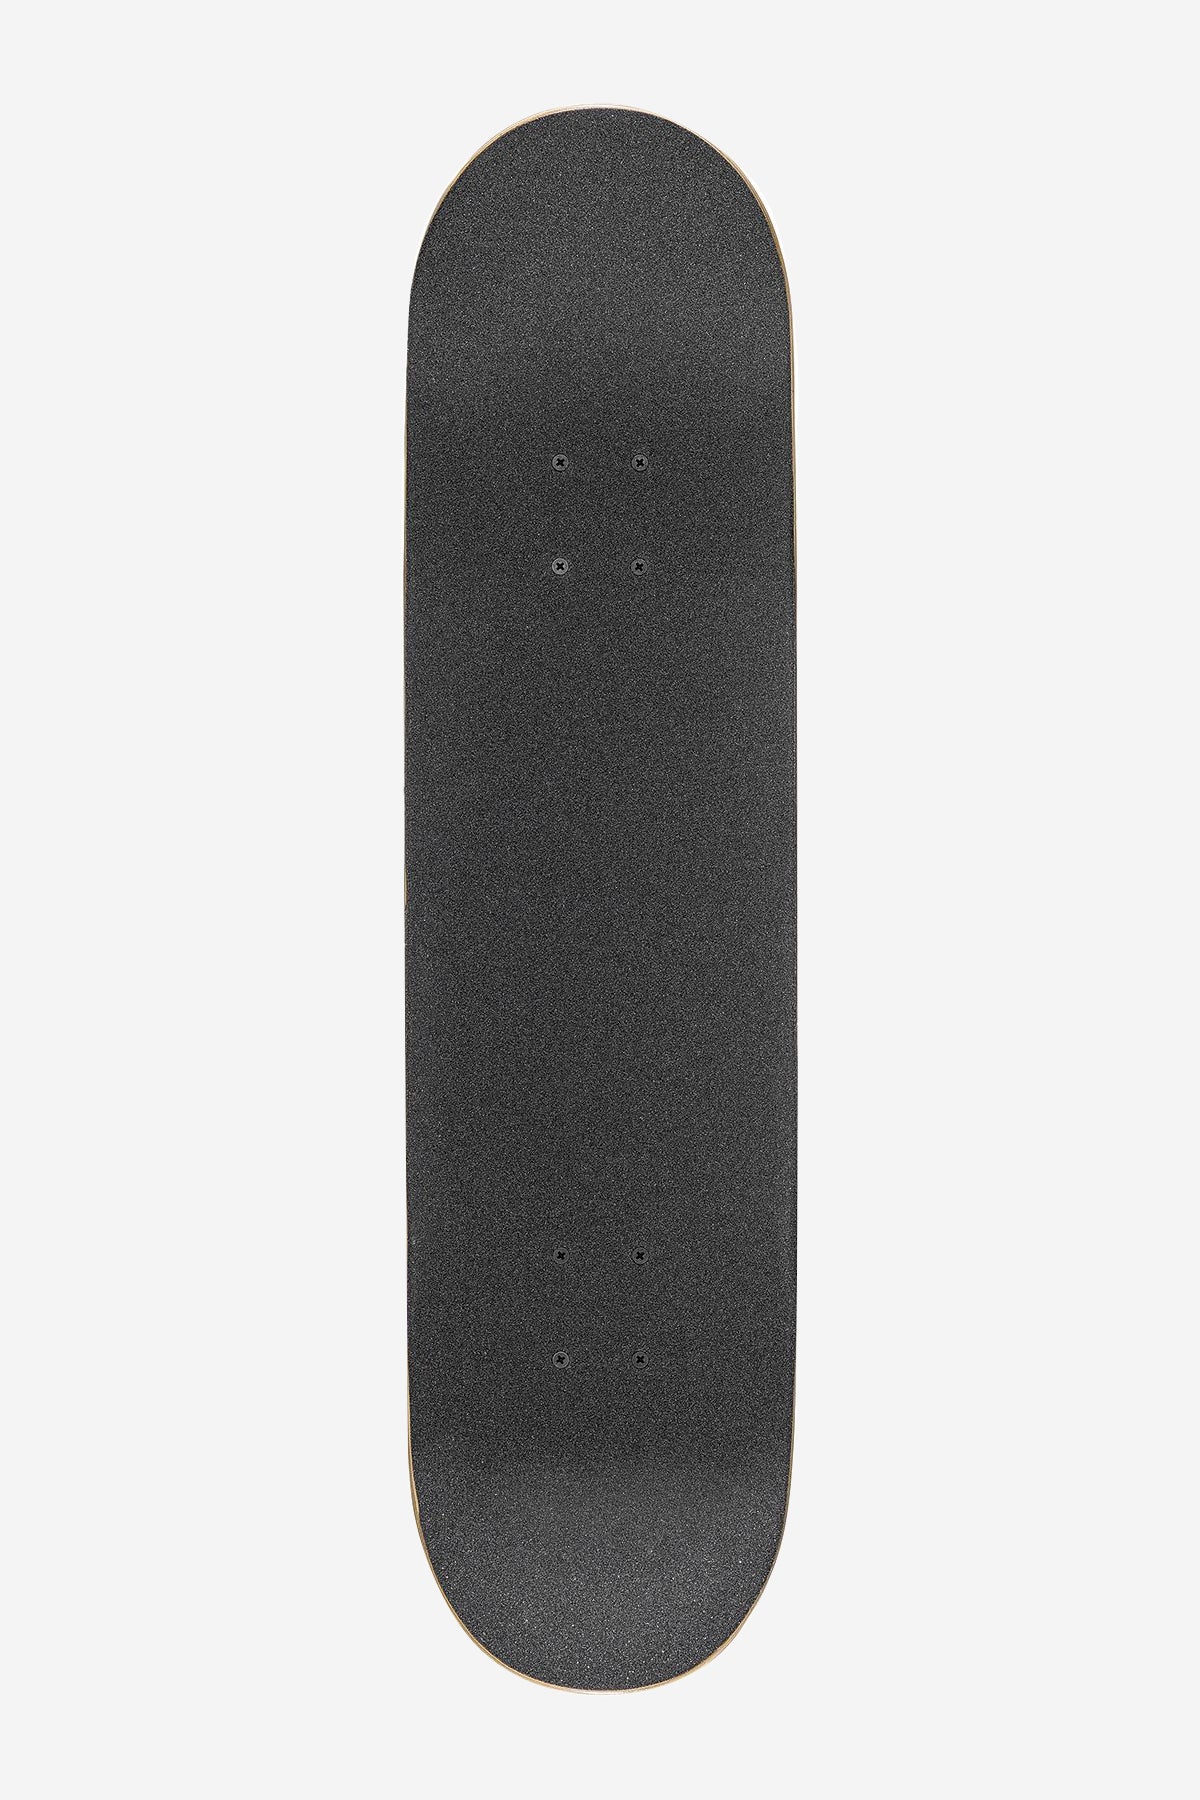 Globe - G1 Excess - White/Brown - 8,0" Completo Skateboard